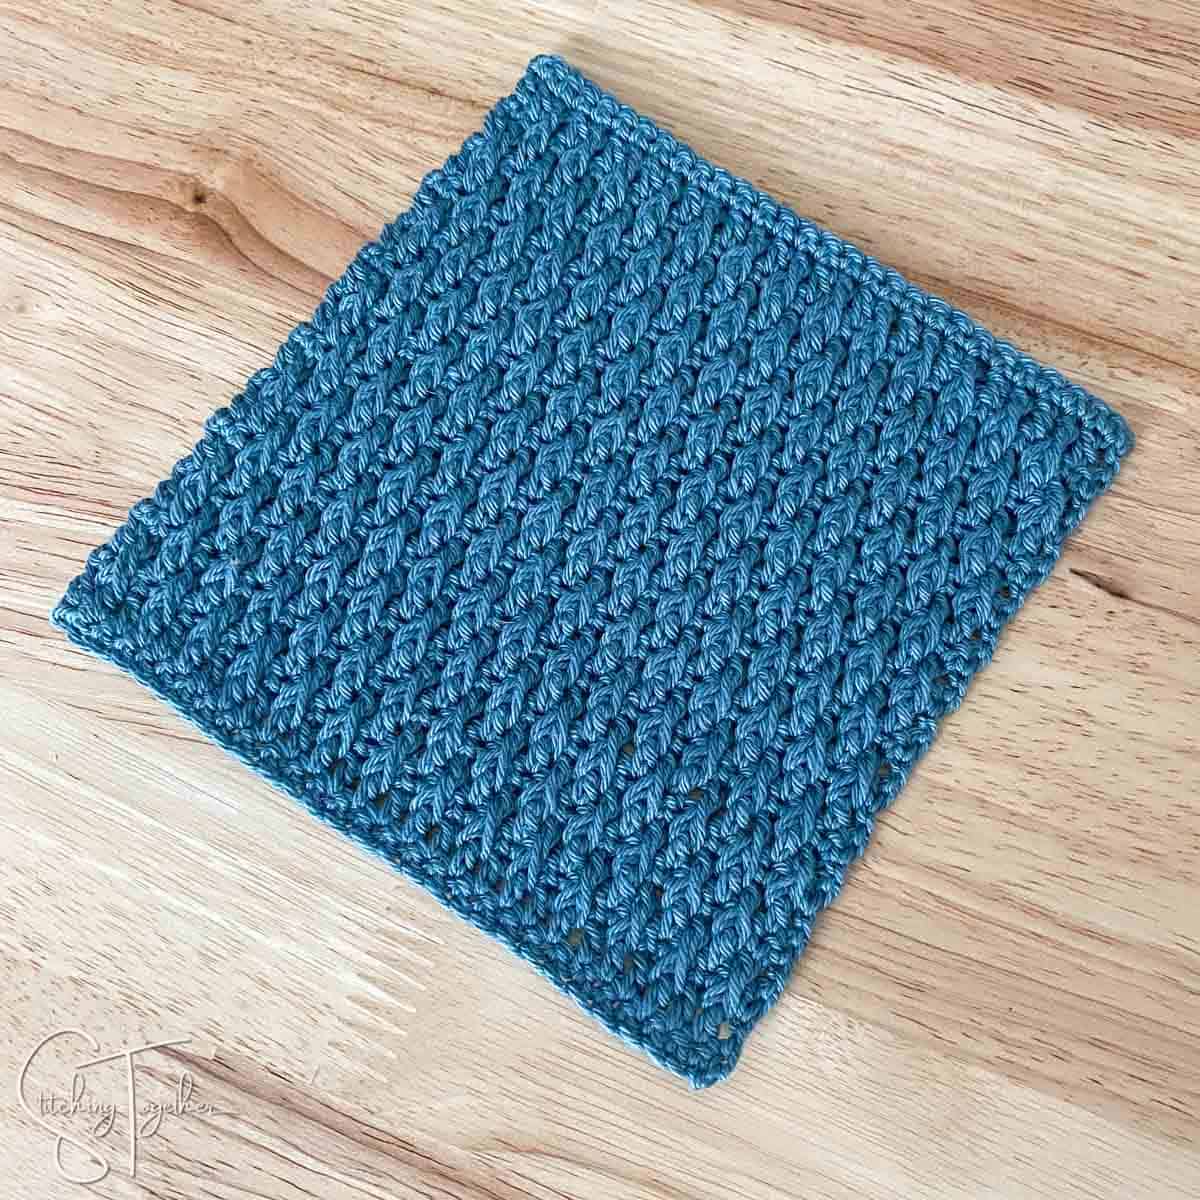 alpine stitch crochet swatch laying flat